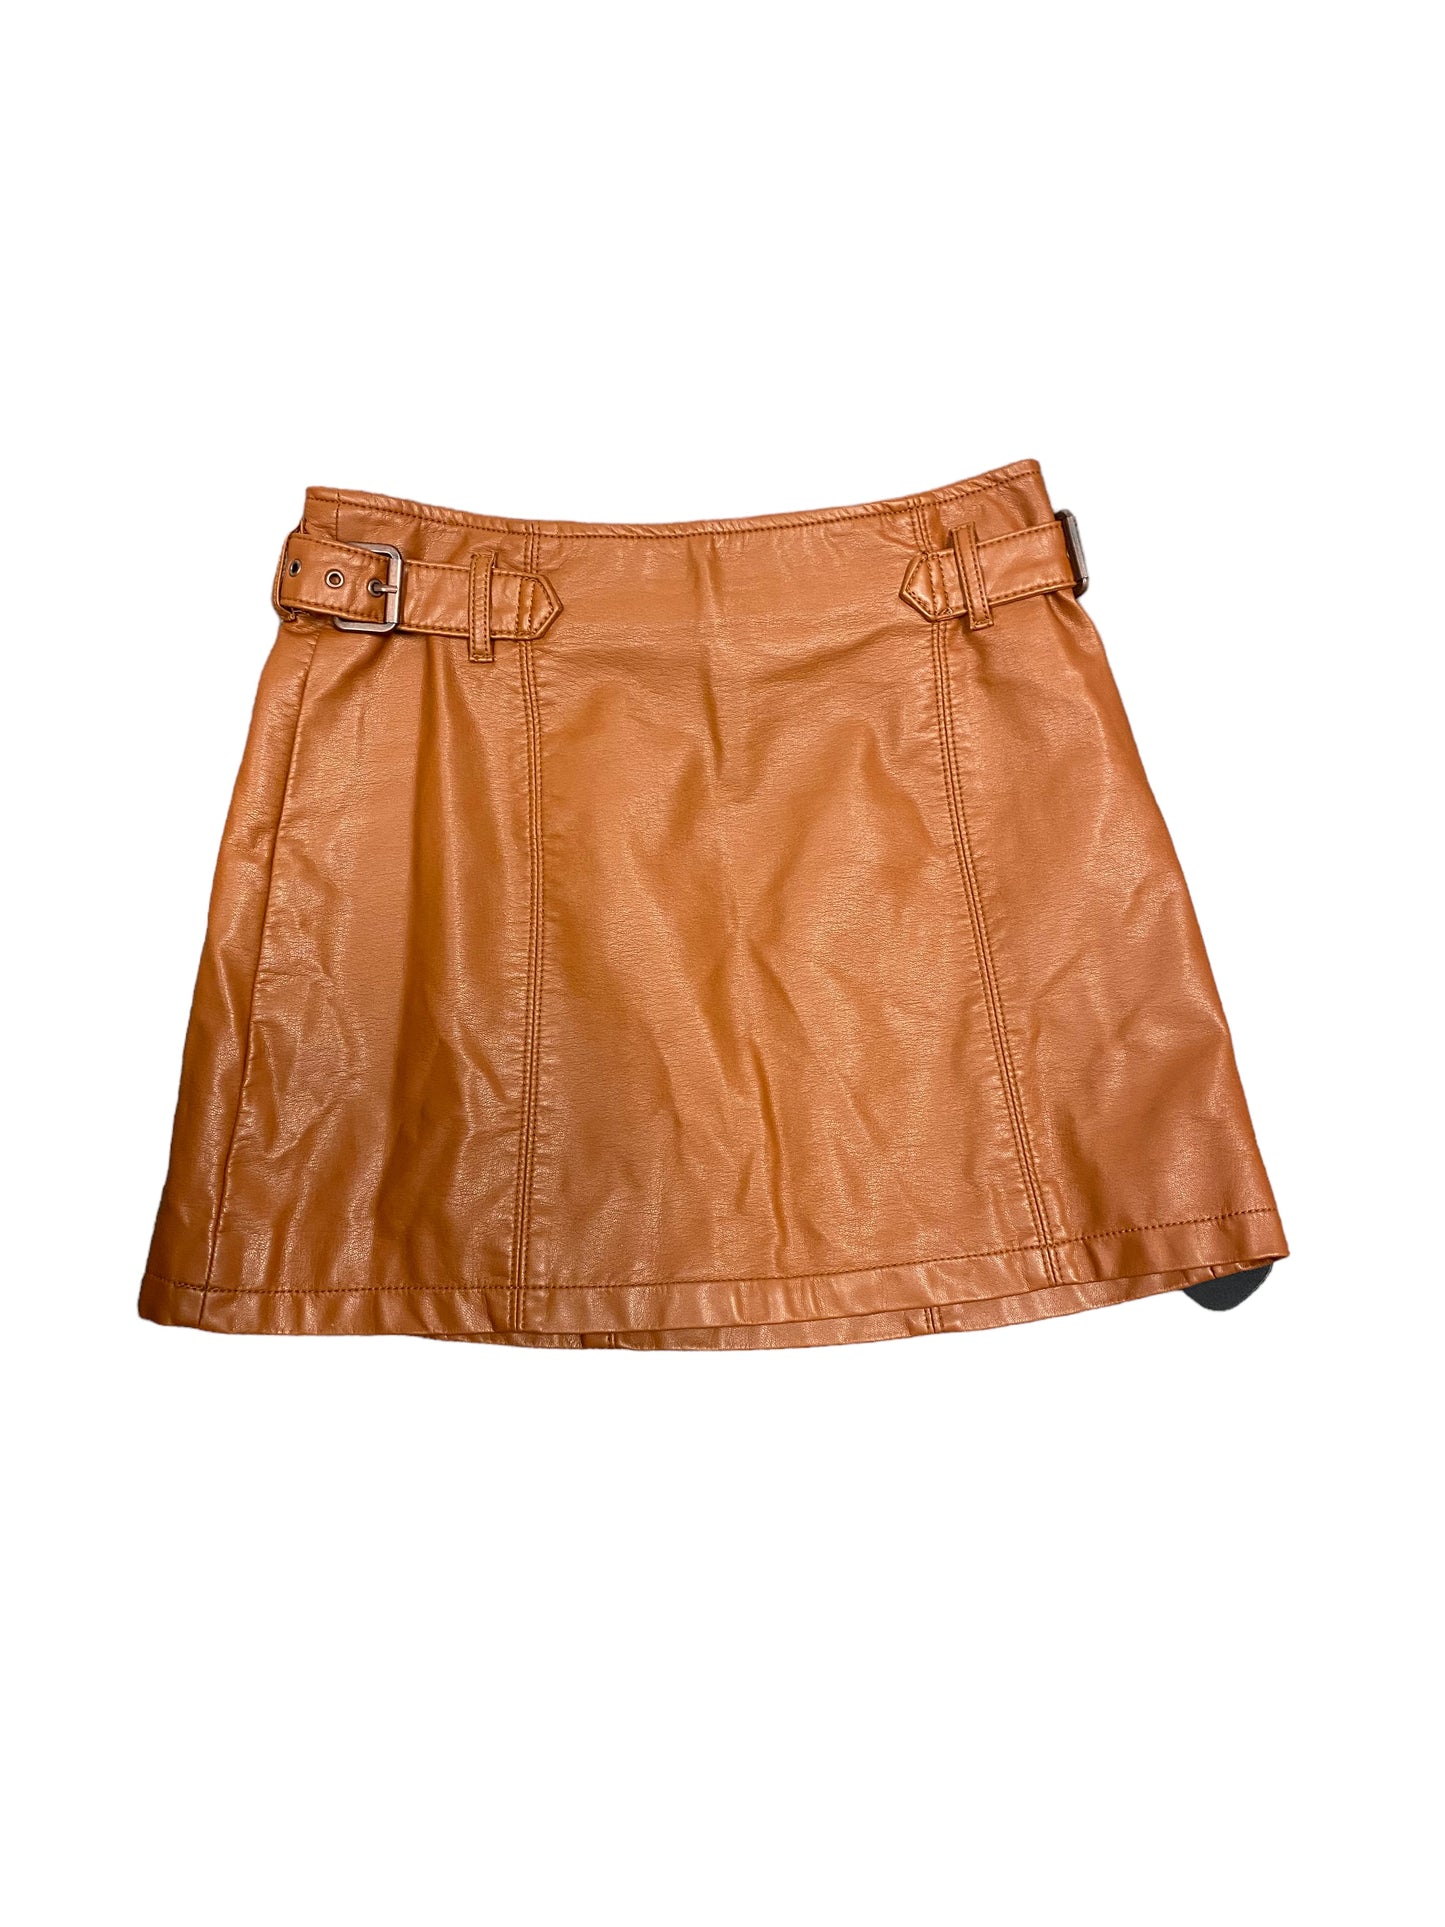 Brown Skirt Midi Free People, Size 0